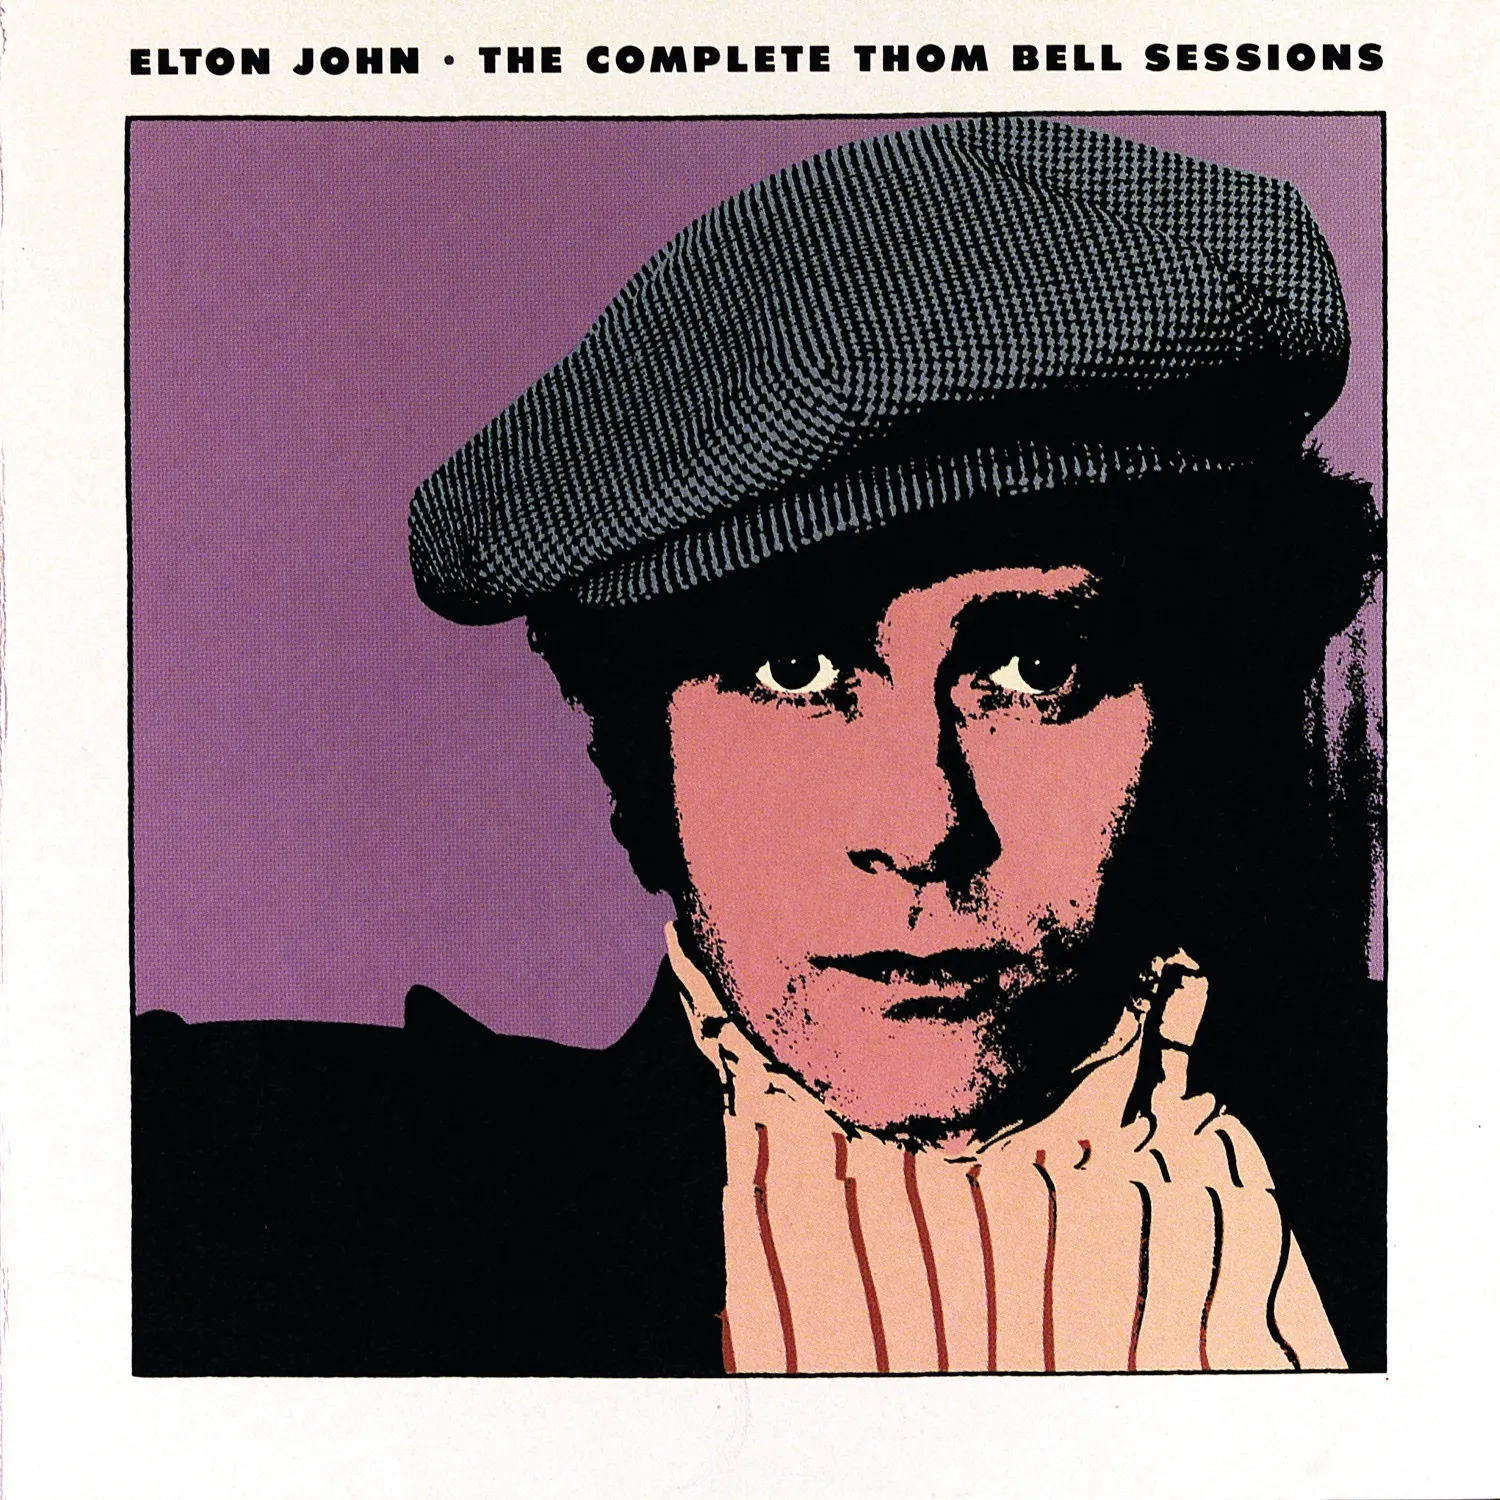 Elton John - The Complete Thom Bell Sessions artwork